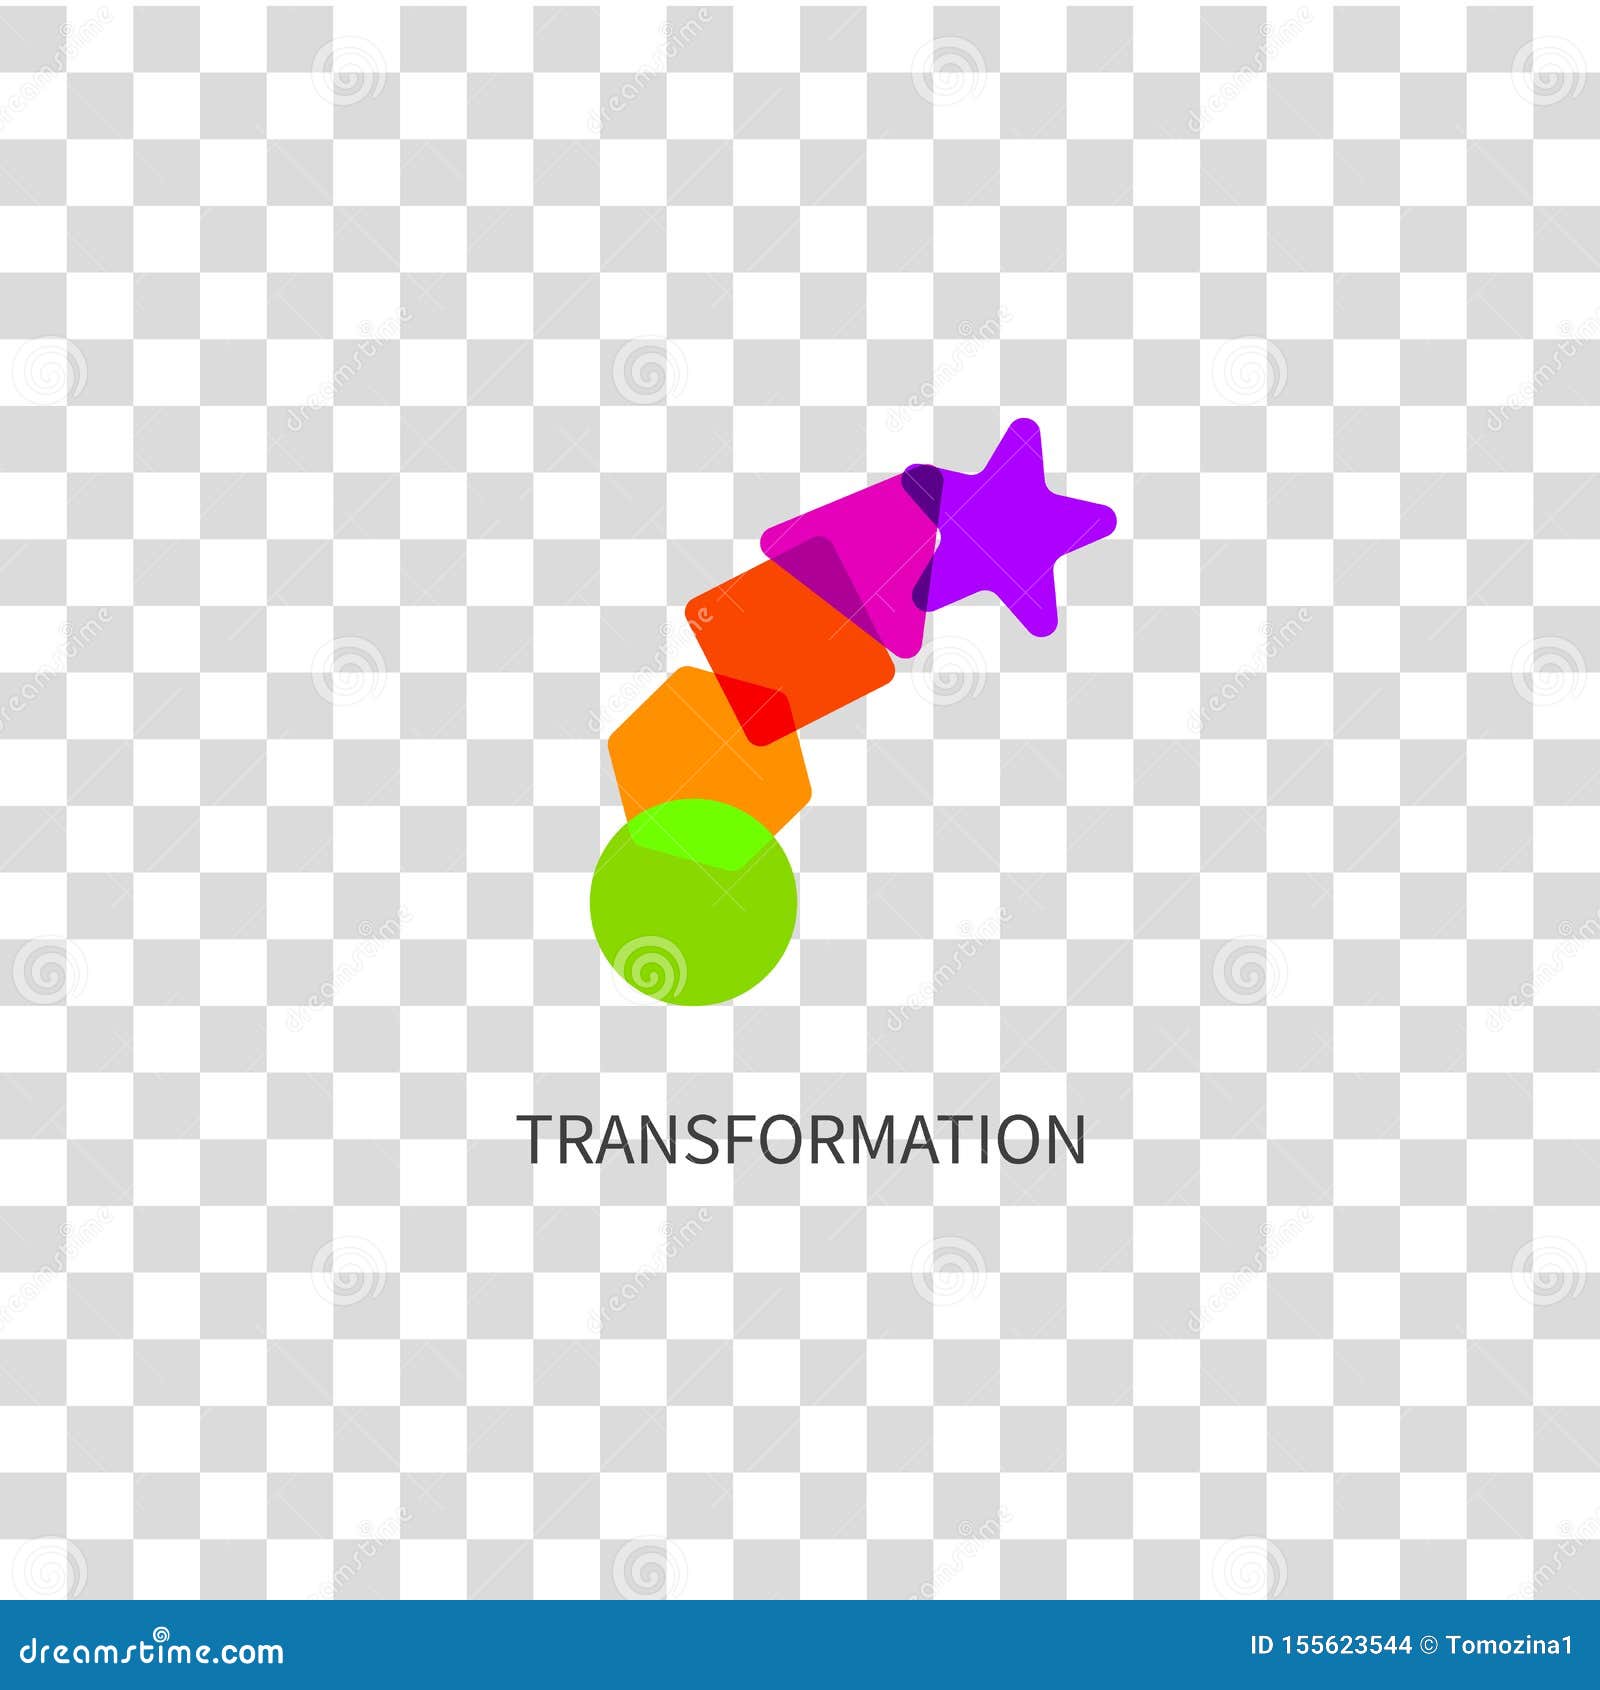 logo transform, icon change